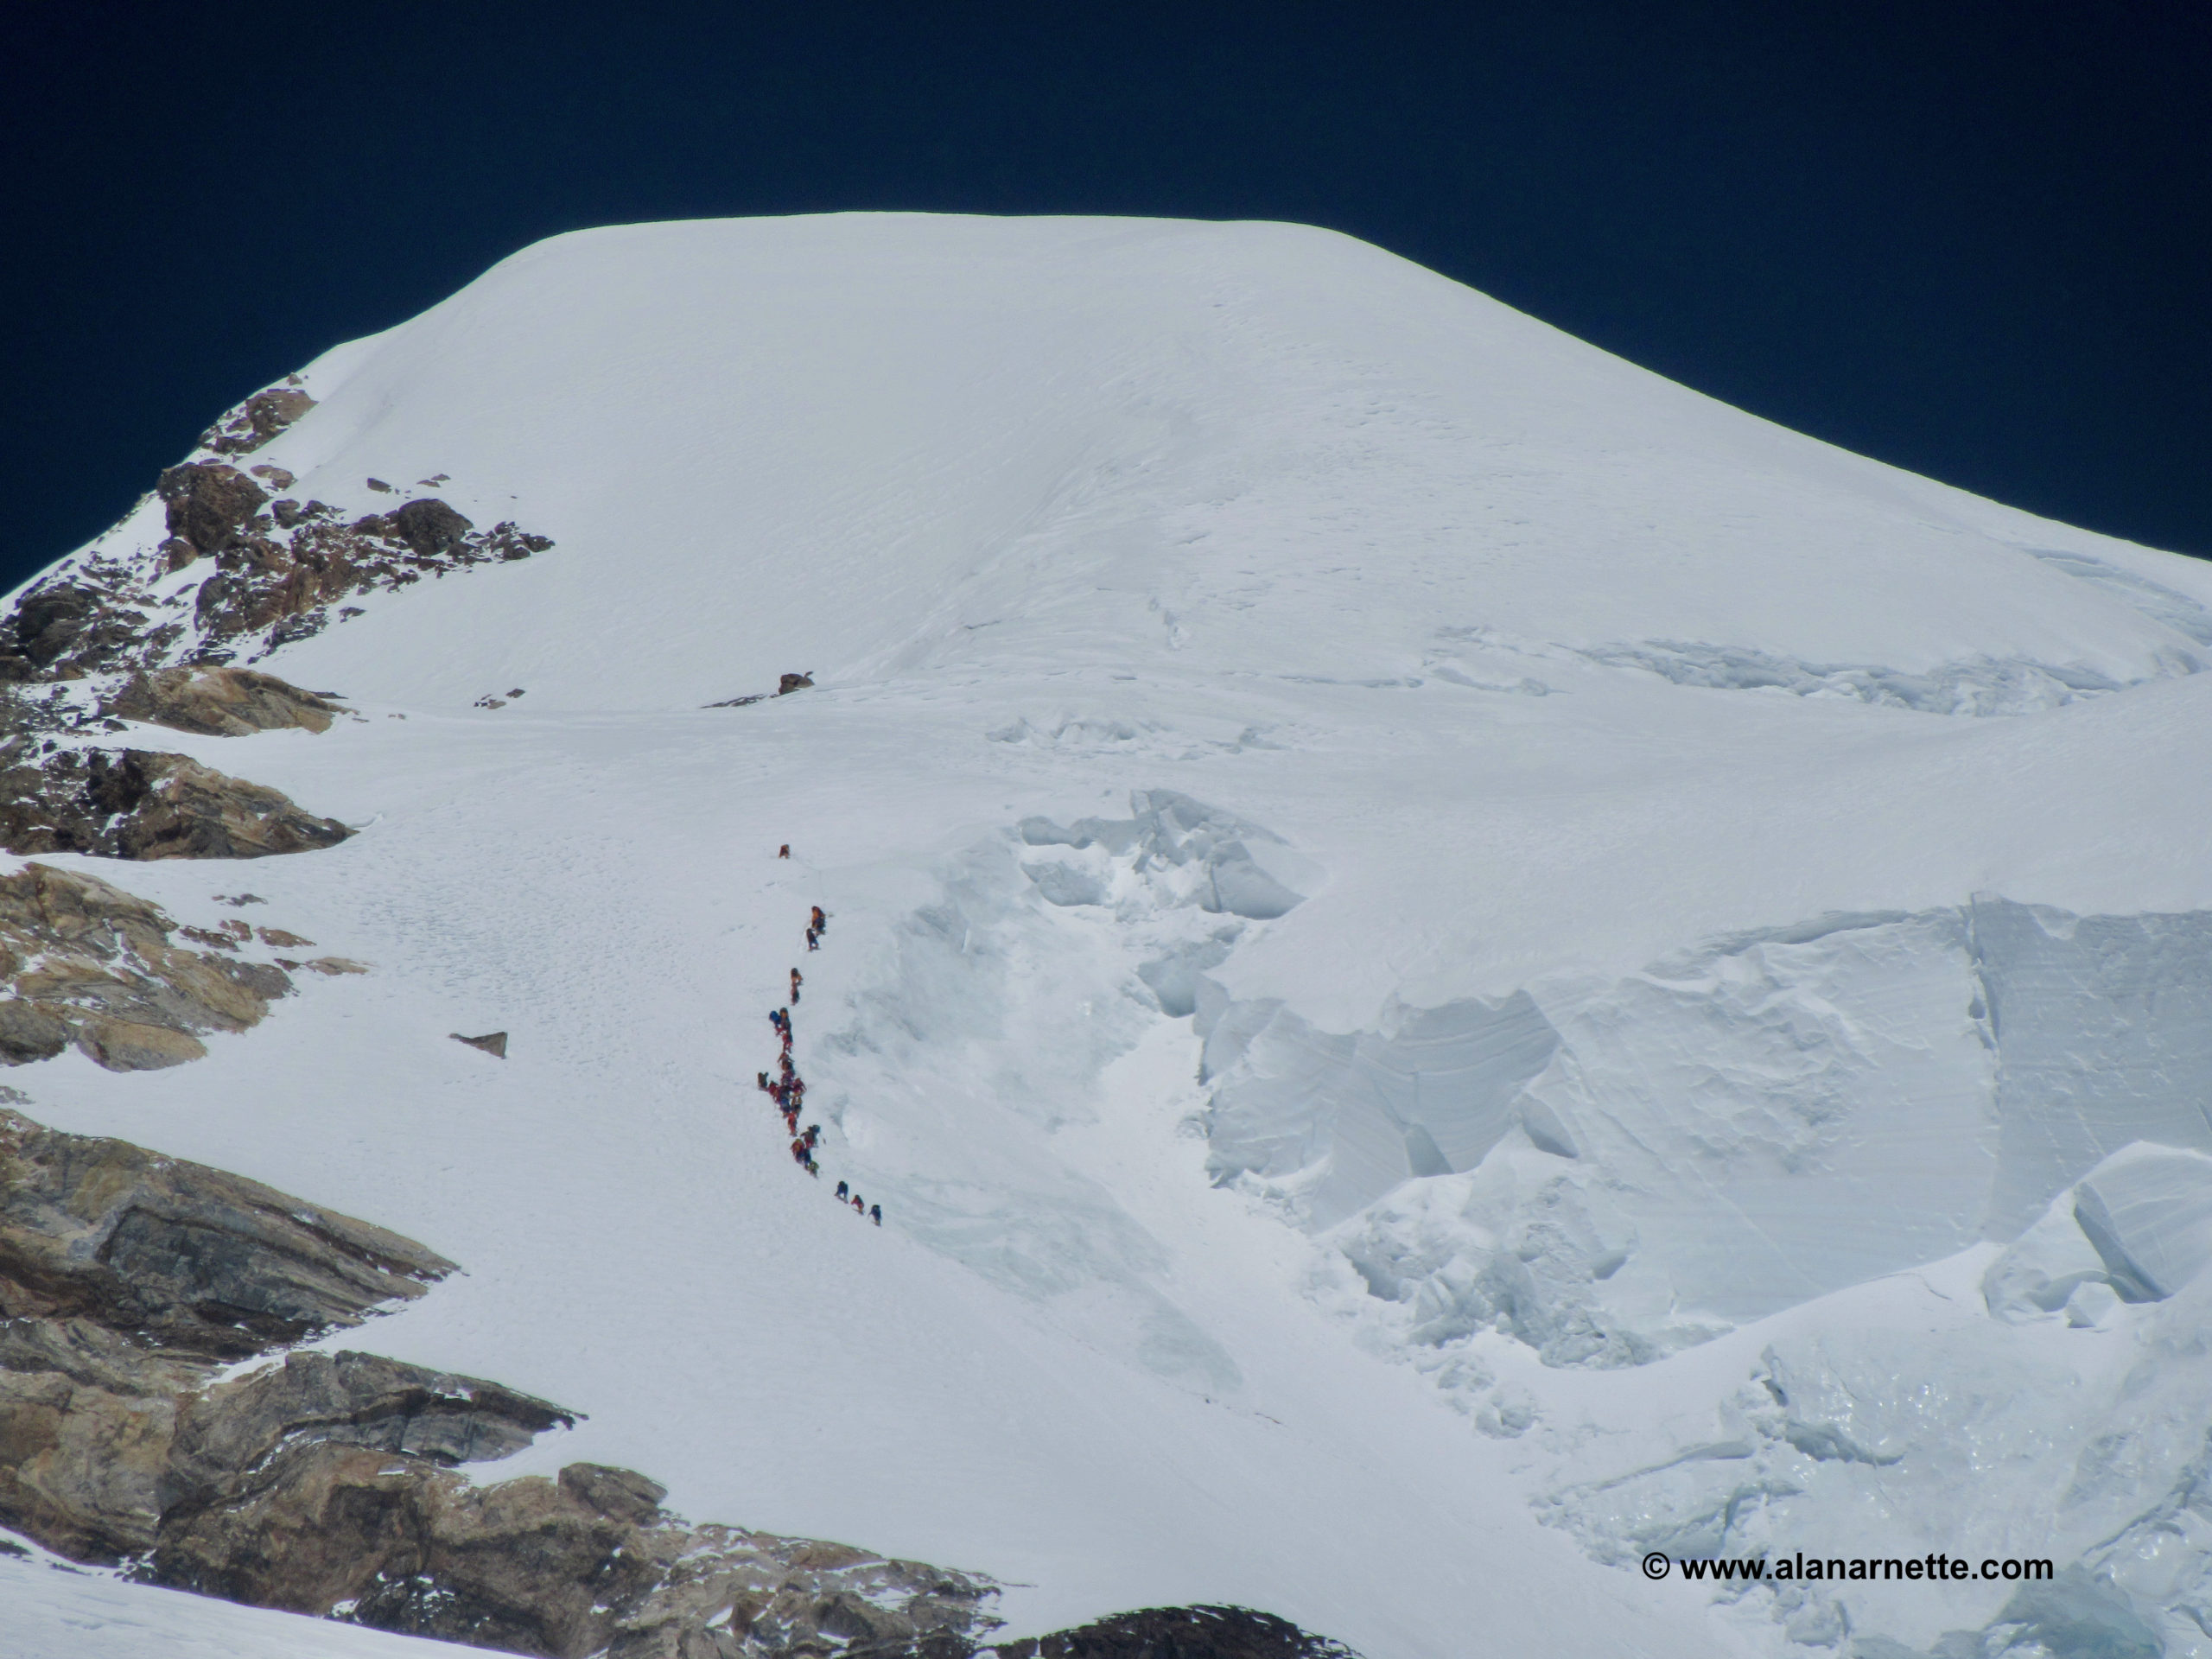 K2 Climbers 2014. © www.alanarnette.com